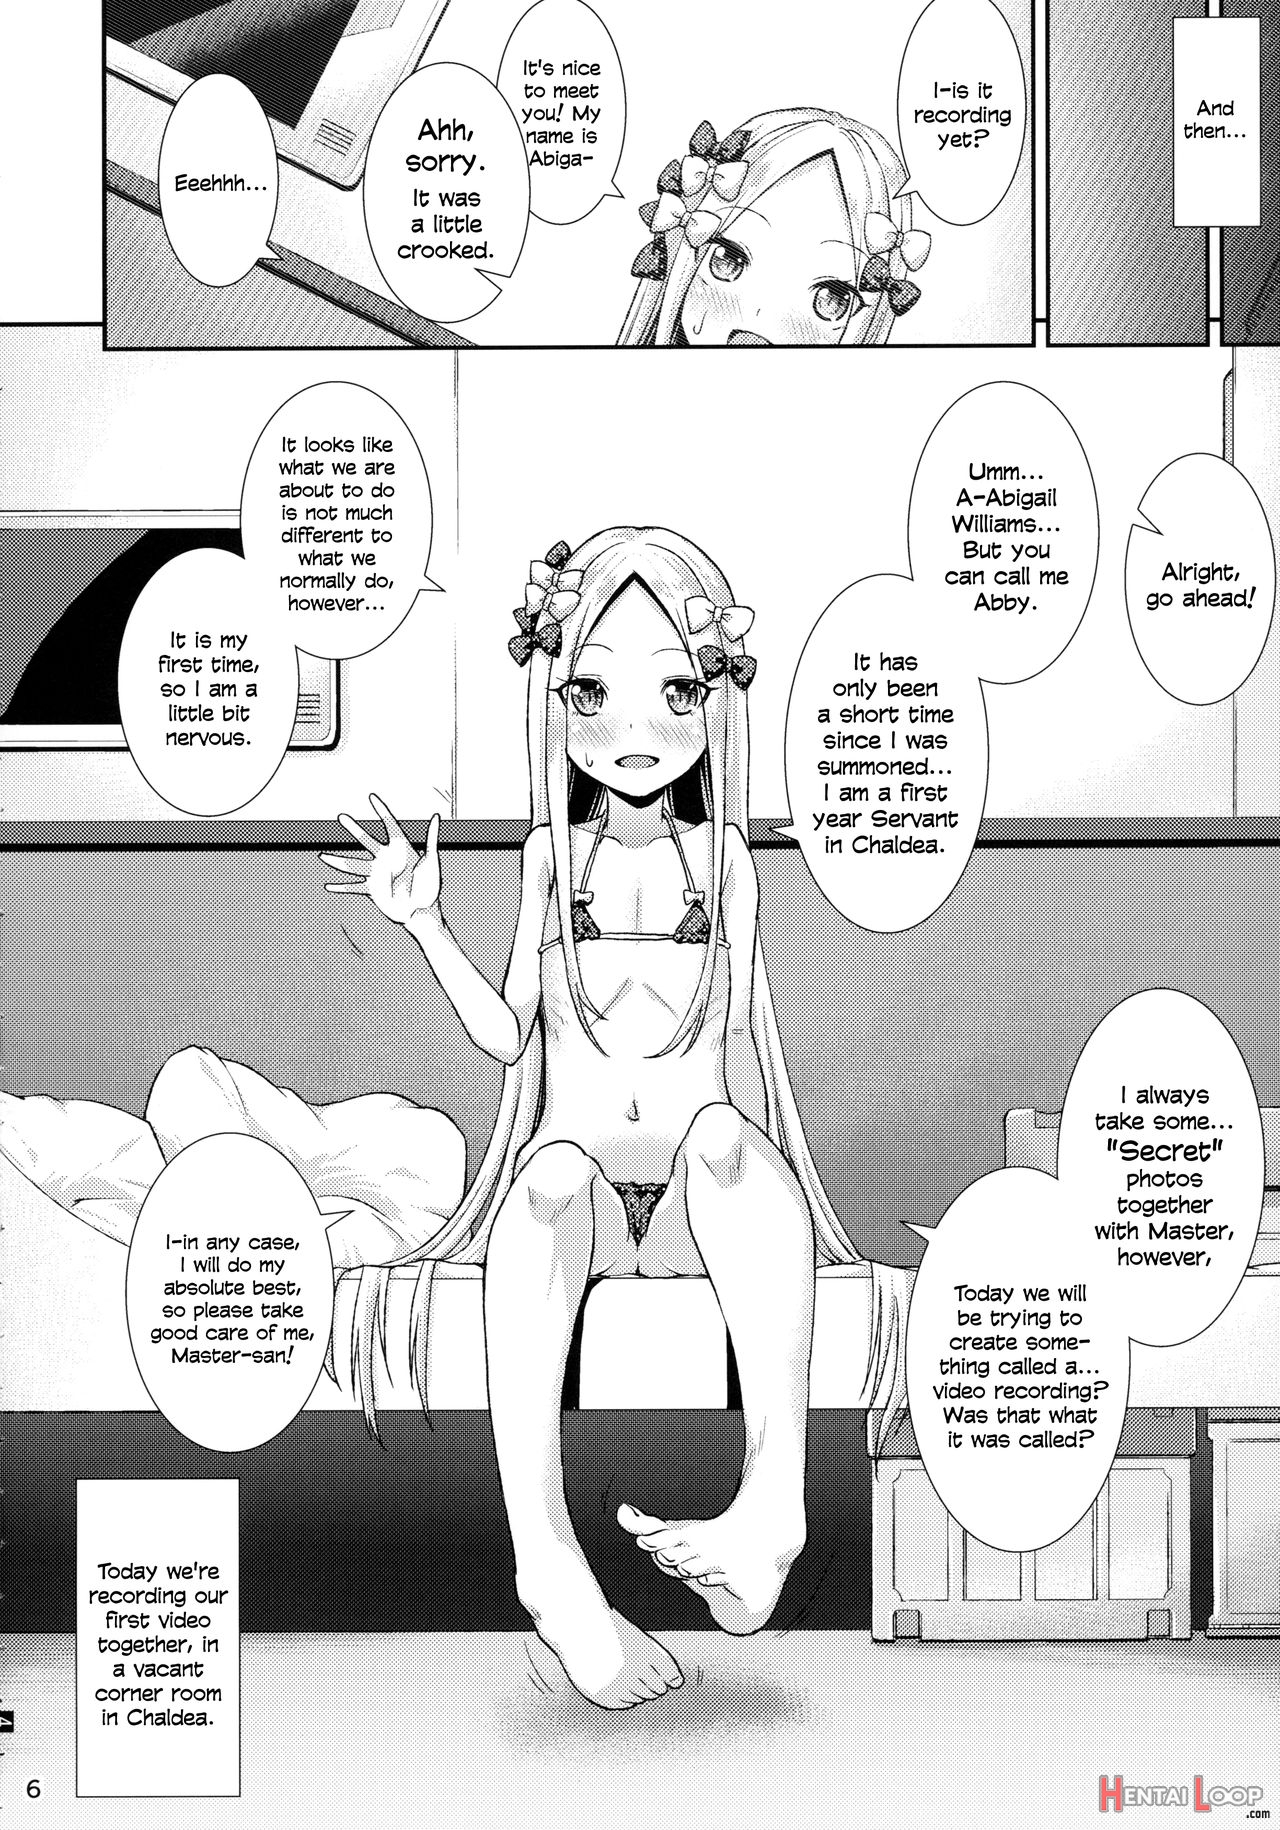 Page 4 of Abby And The Secret Homemade Sex Tape (by Yamazaki Kana)